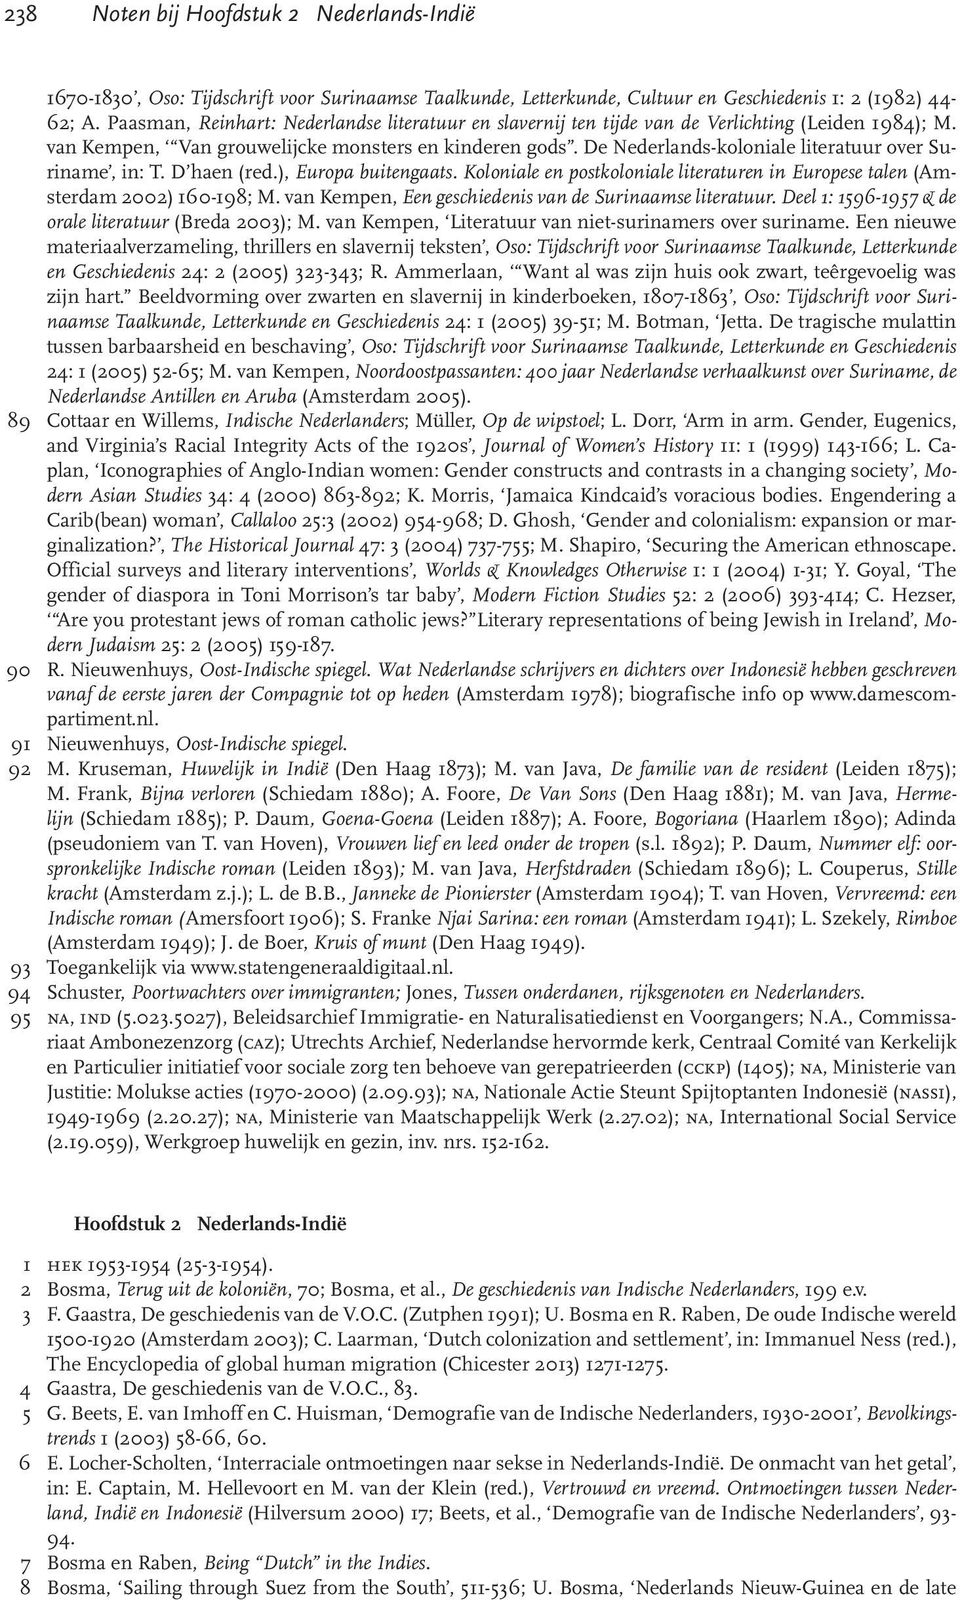 De Nederlands-koloniale literatuur over Suriname, in: T. D haen (red.), Europa buitengaats. Koloniale en postkoloniale literaturen in Europese talen (Amsterdam 2002) 160-198; M.